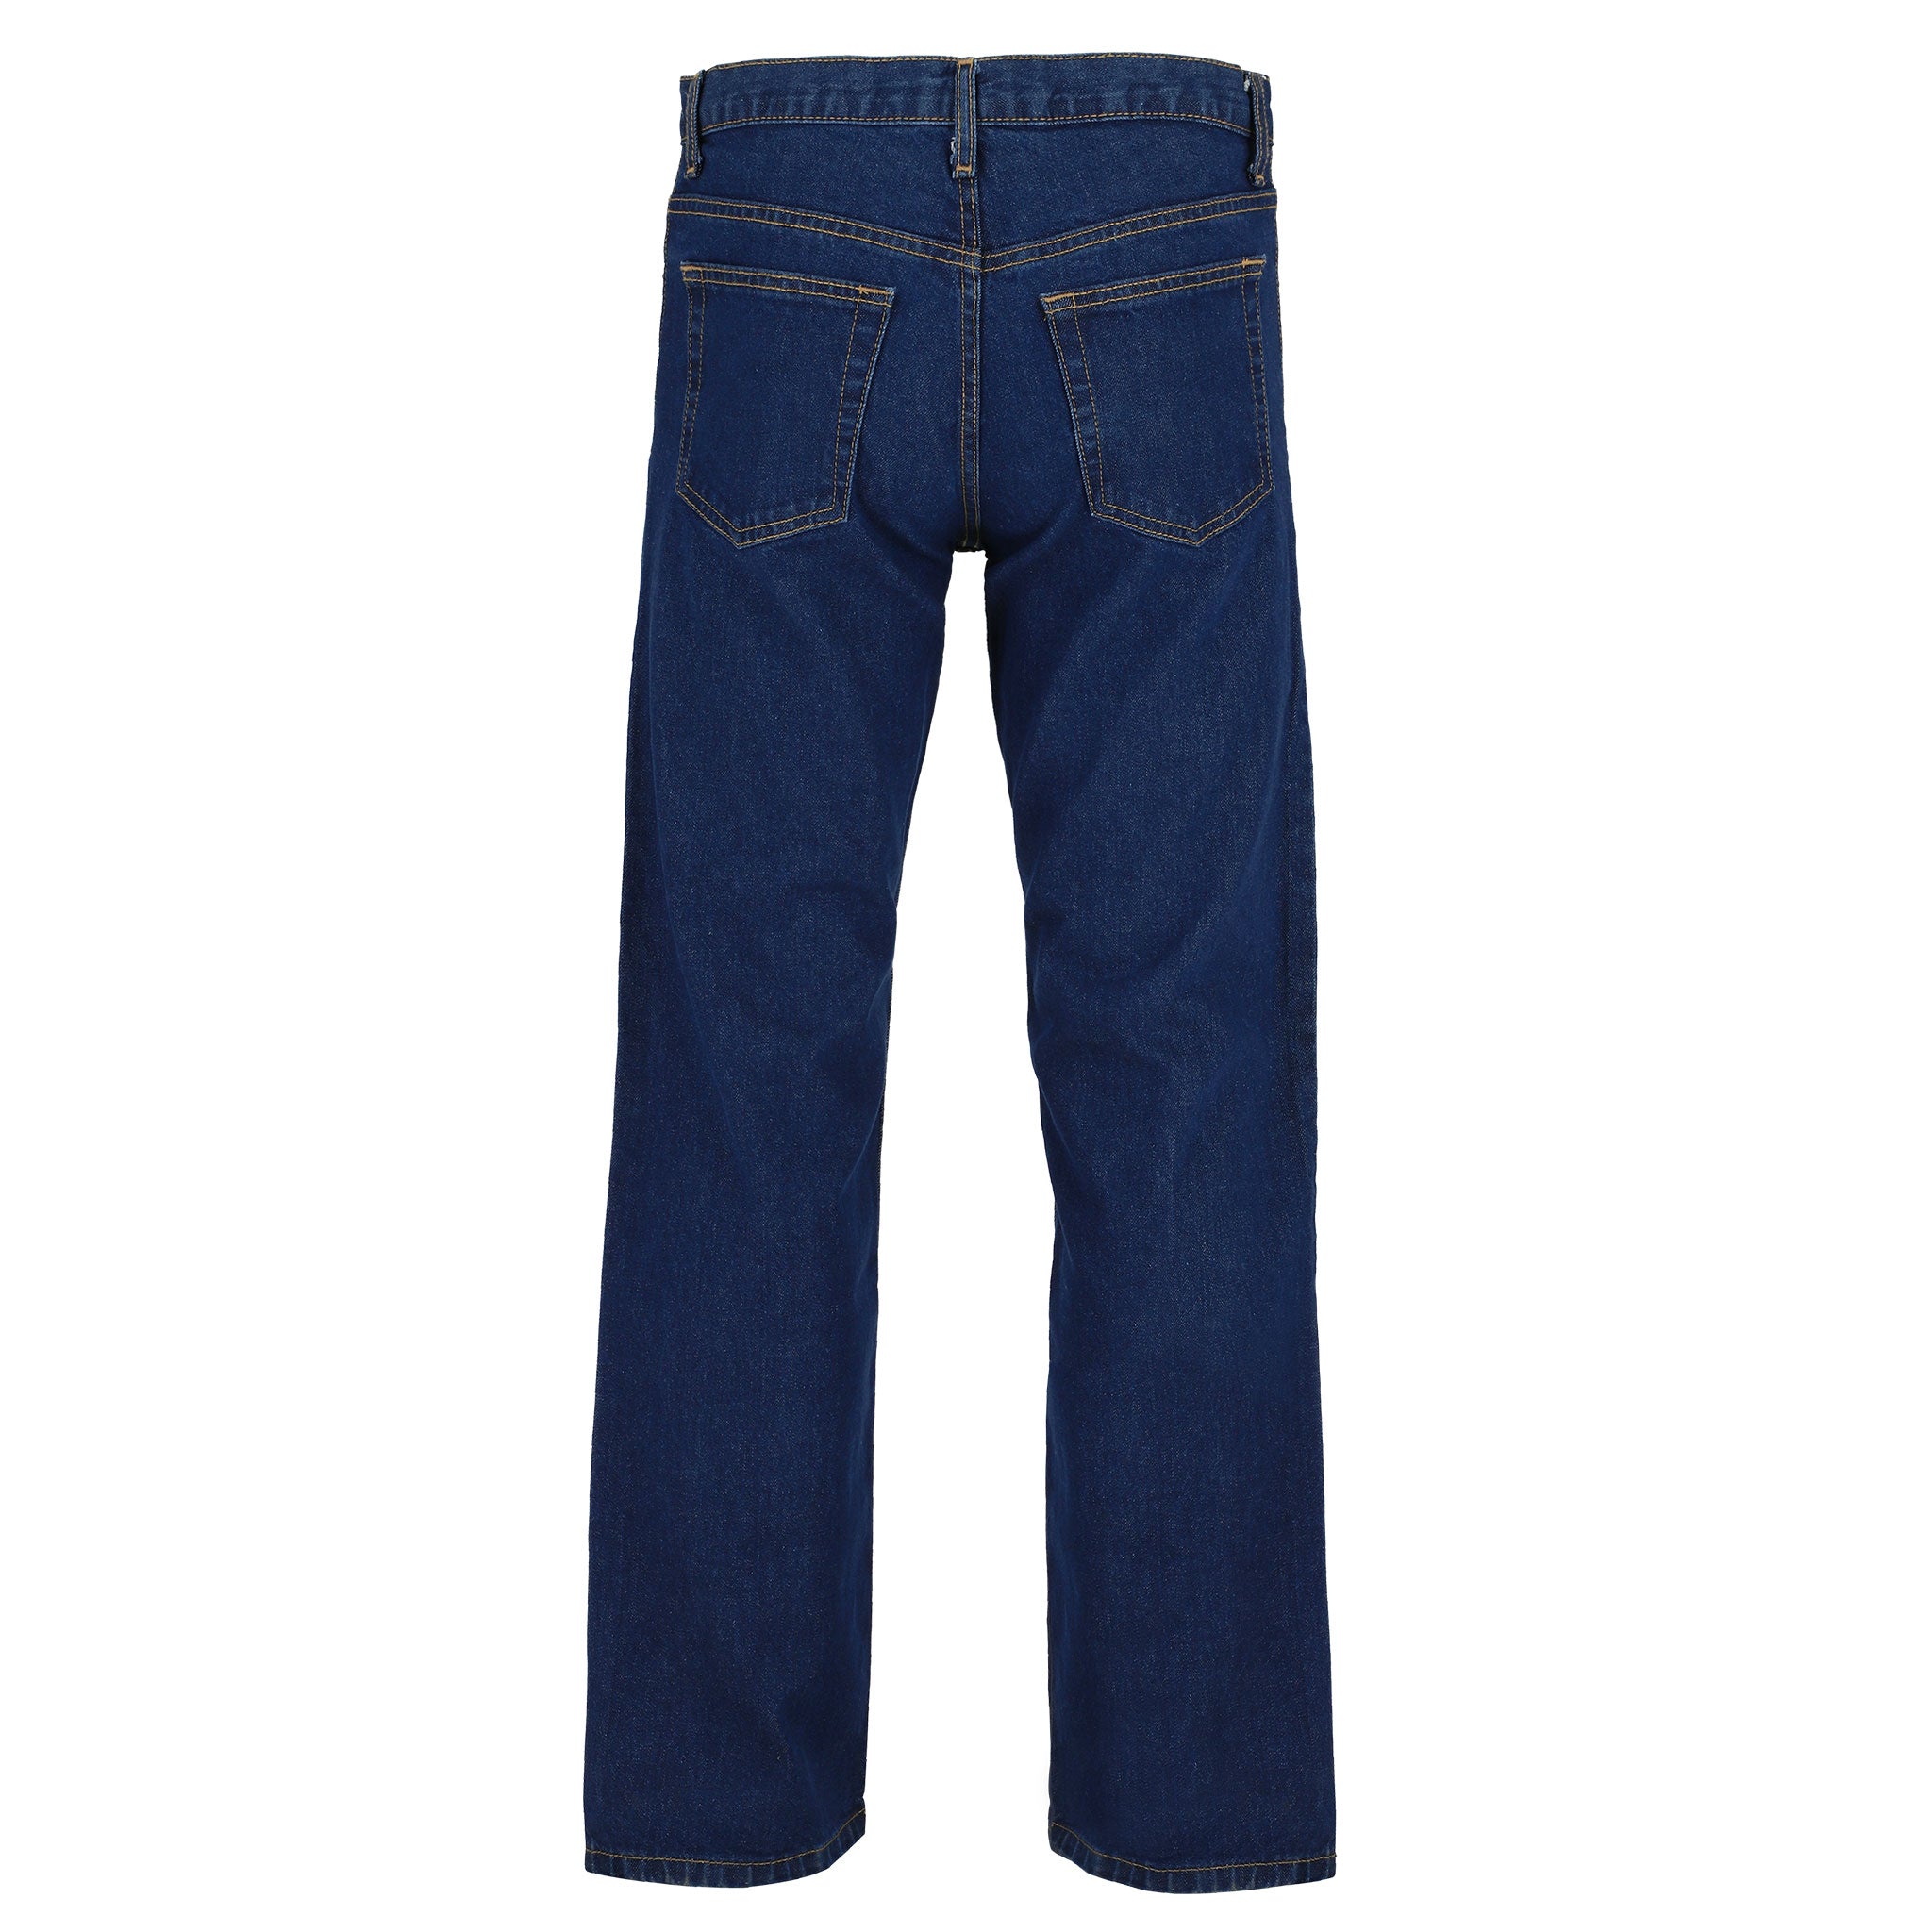 Levi's 501 White Oak Cone Denim Button Fly Jeans Mens… - Gem